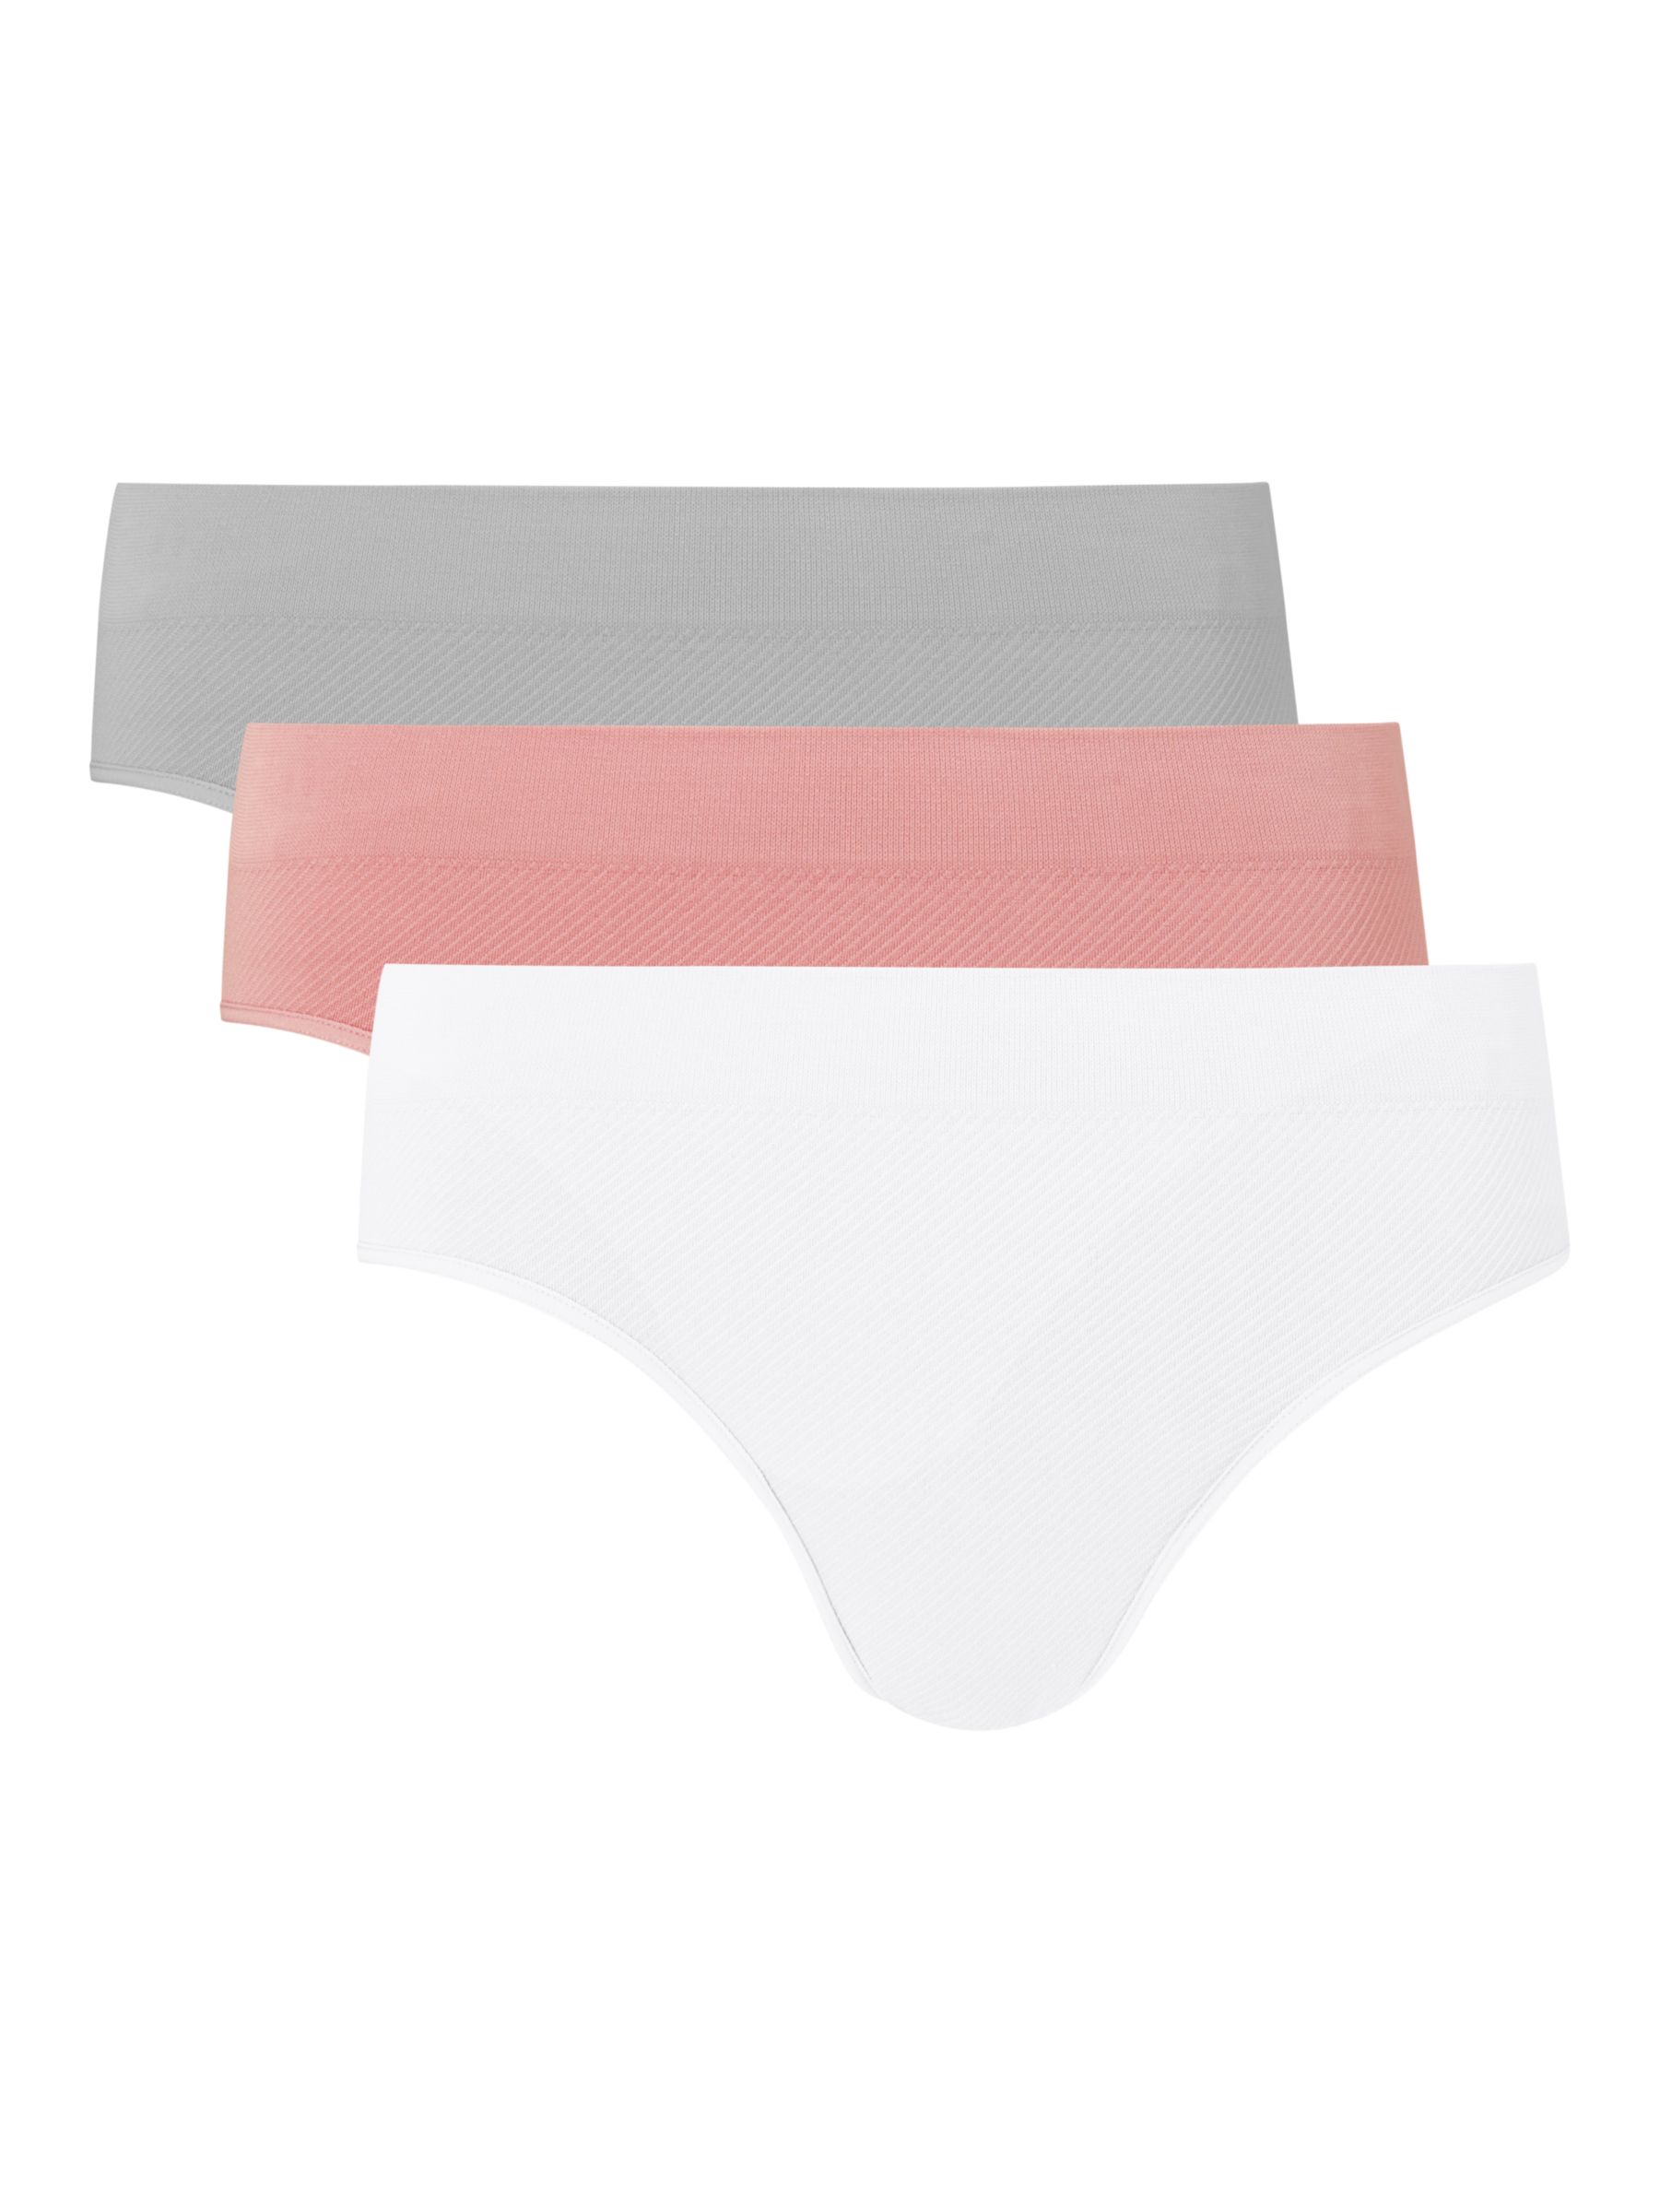 John Lewis Seam Free Ribbed Bikini Knickers, Pack of 3, Pink/White/Grey, 12